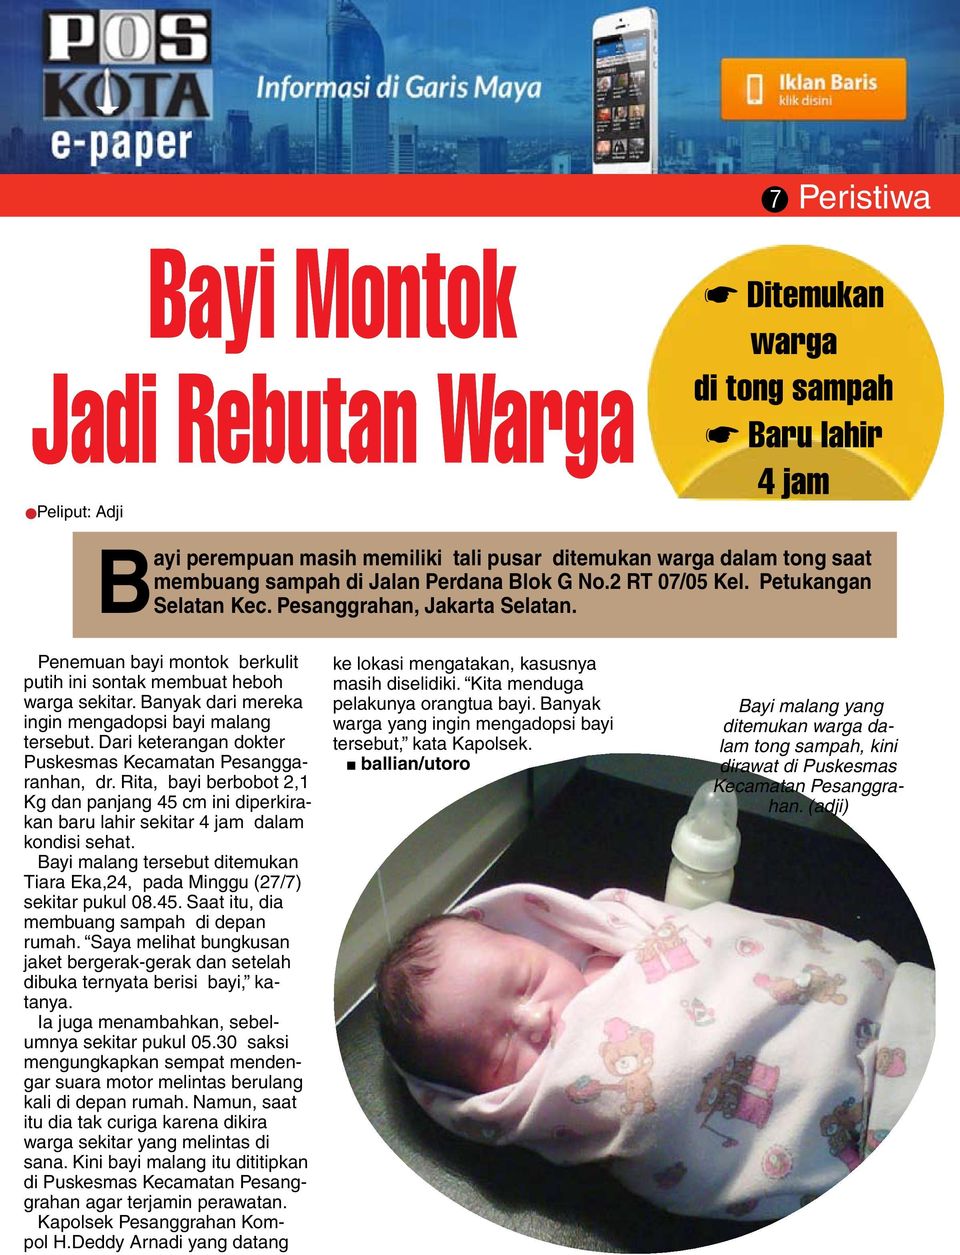 Banyak dari mereka ingin mengadopsi bayi malang tersebut. Dari keterangan dokter Puskesmas Kecamatan Pesanggaranhan, dr.